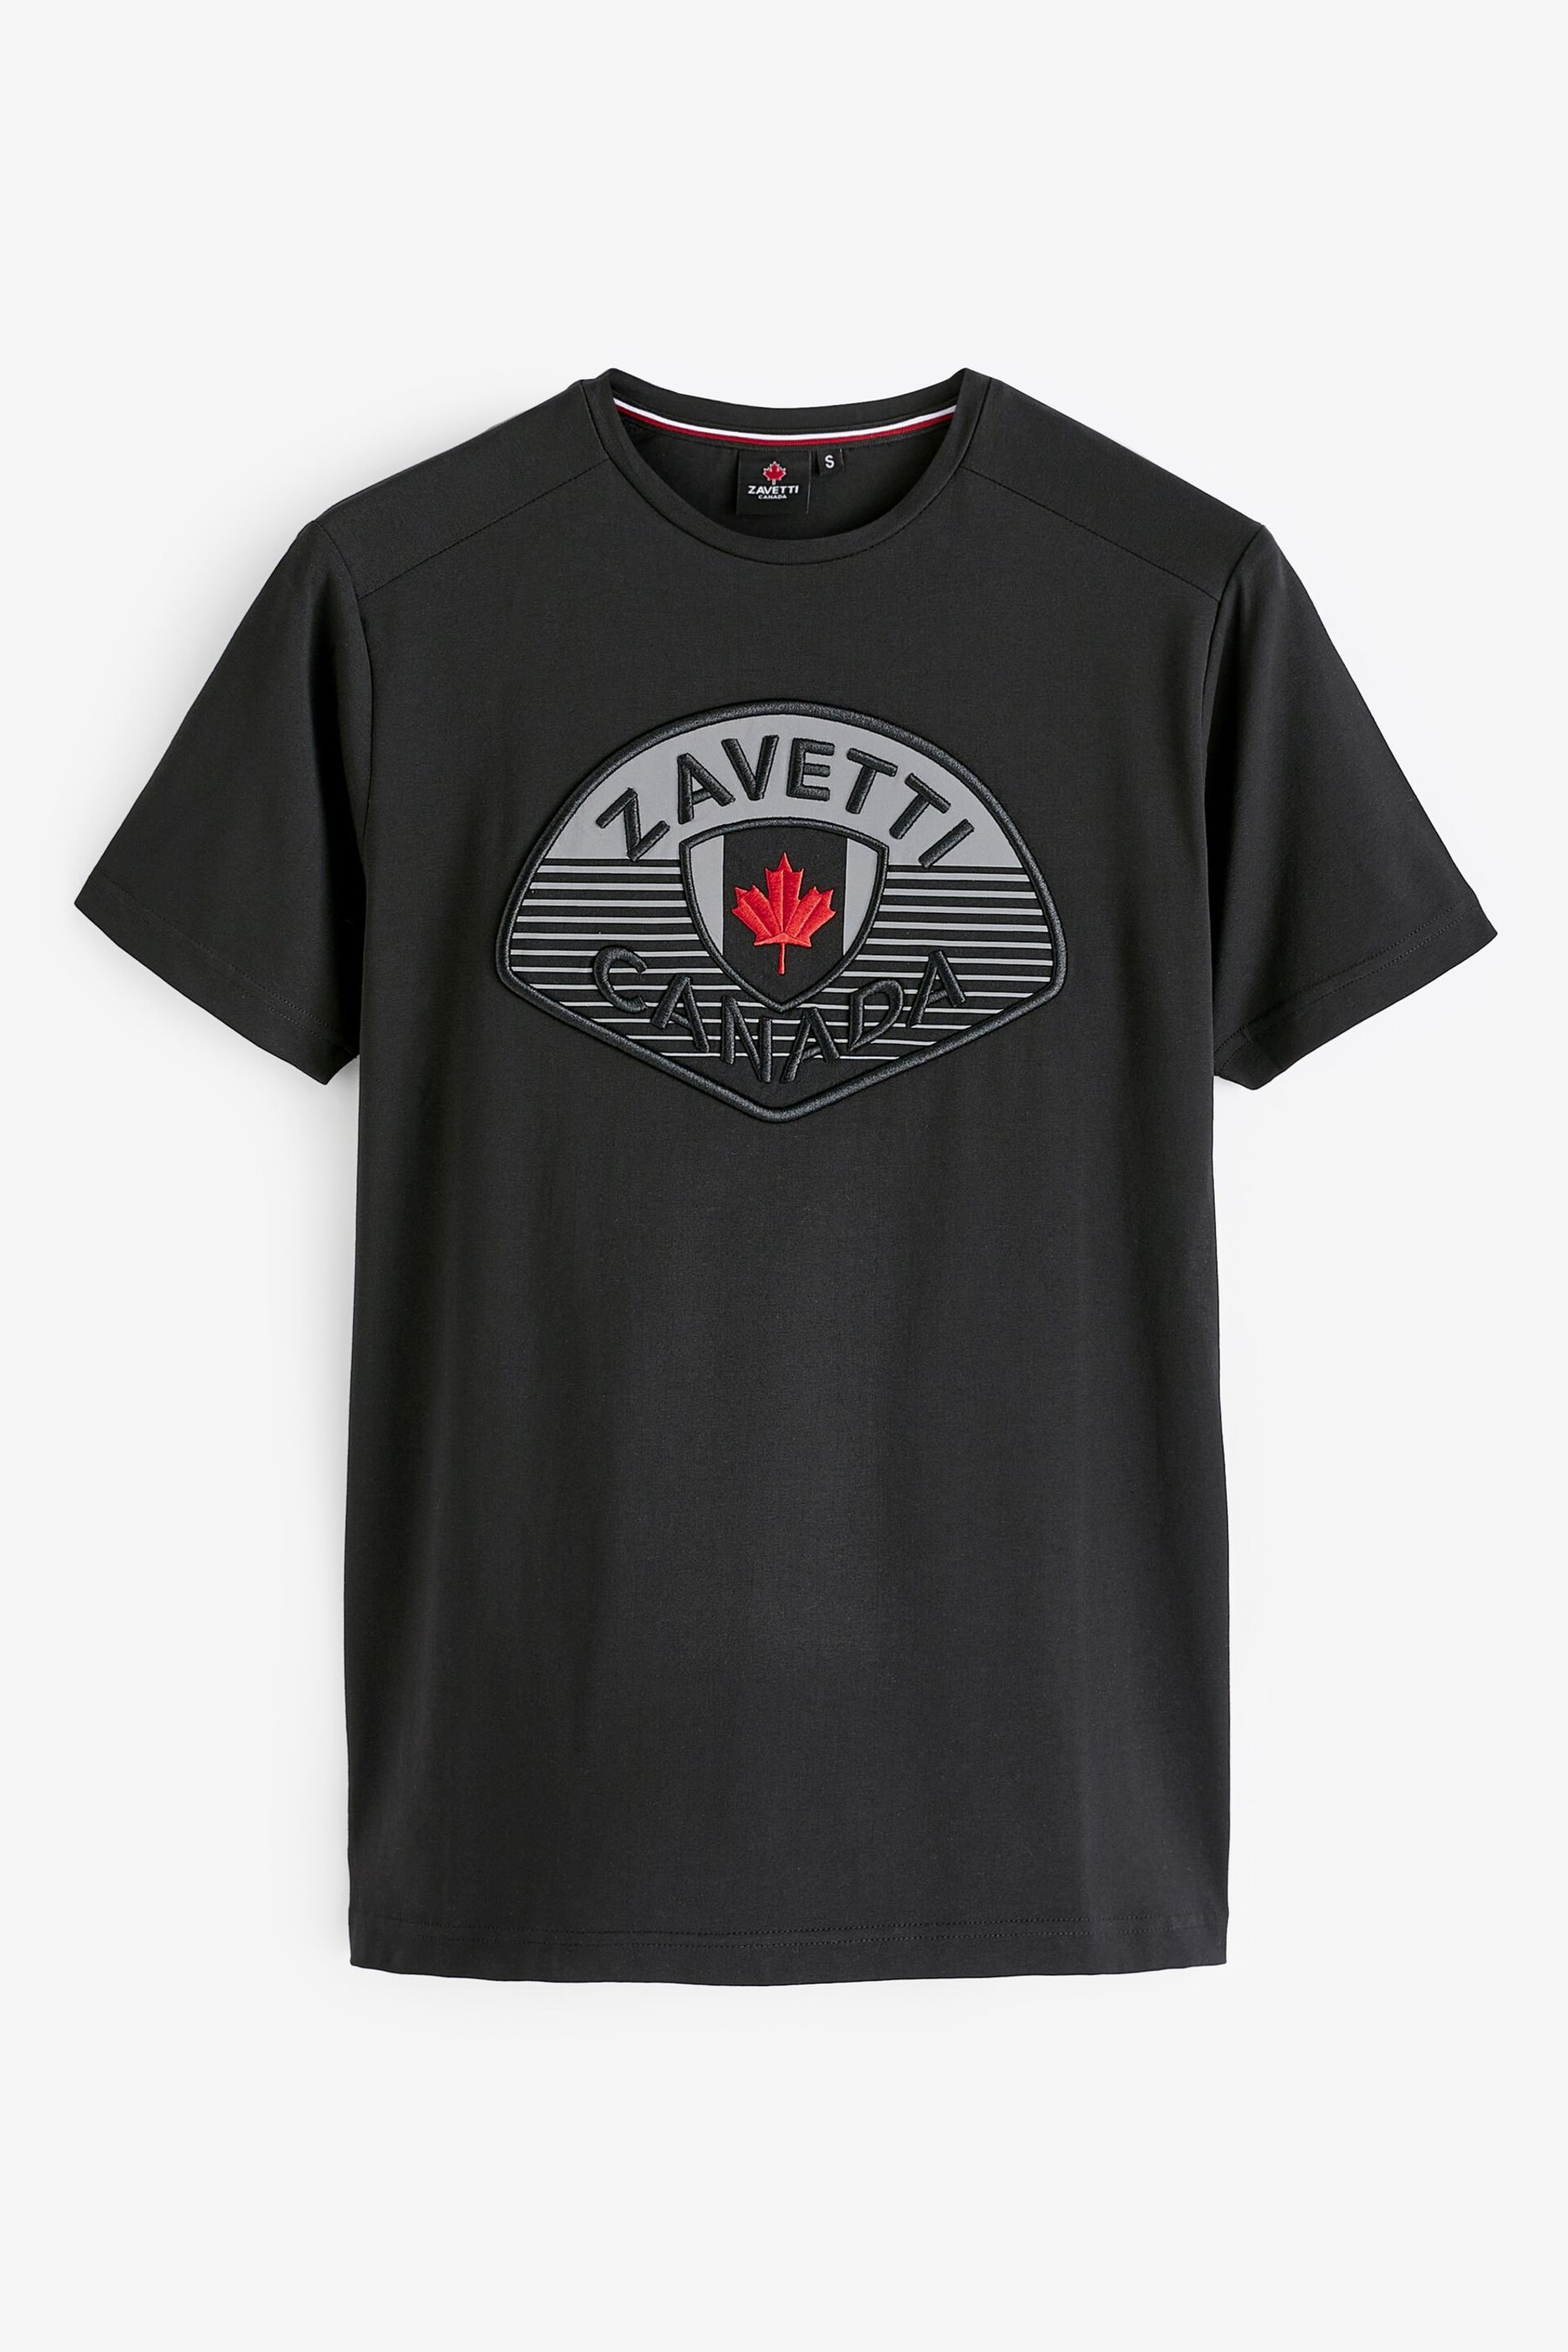 Zavetti Canada Black Botticini Reflective T-Shirt - Image 6 of 6